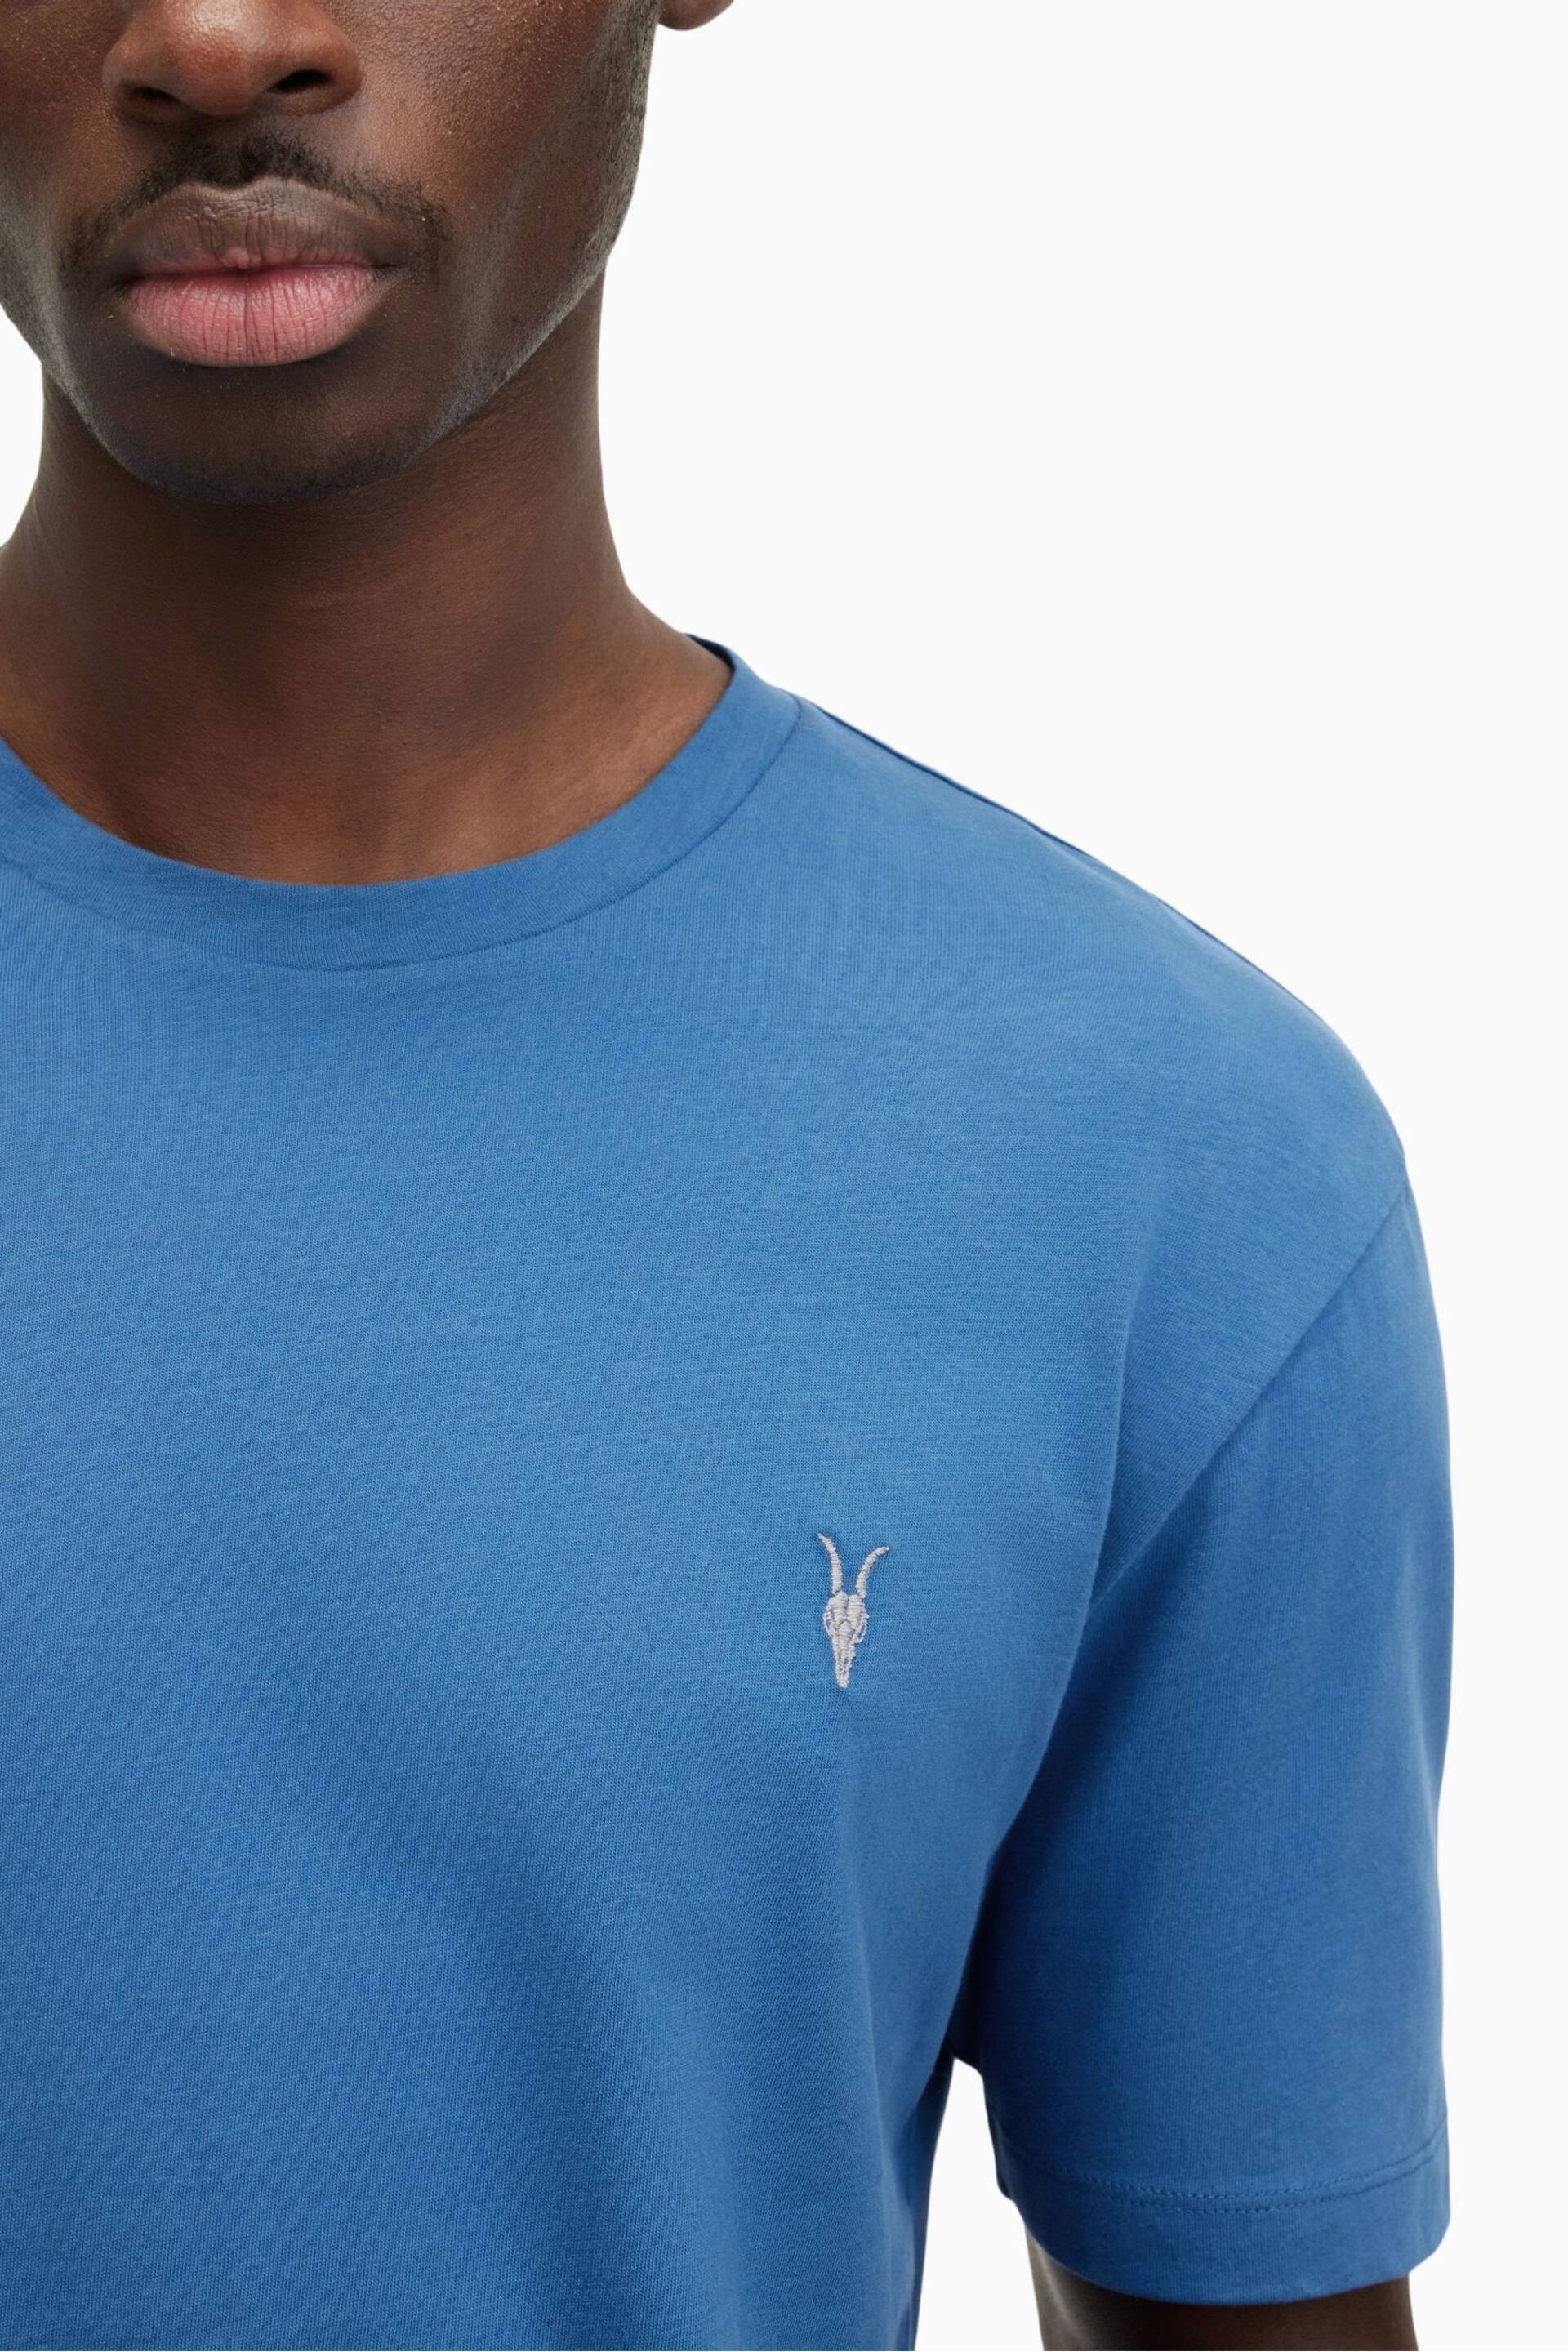 AllSaints Blue Brace Short Sleeve Crew Neck T-Shirt - Image 2 of 5